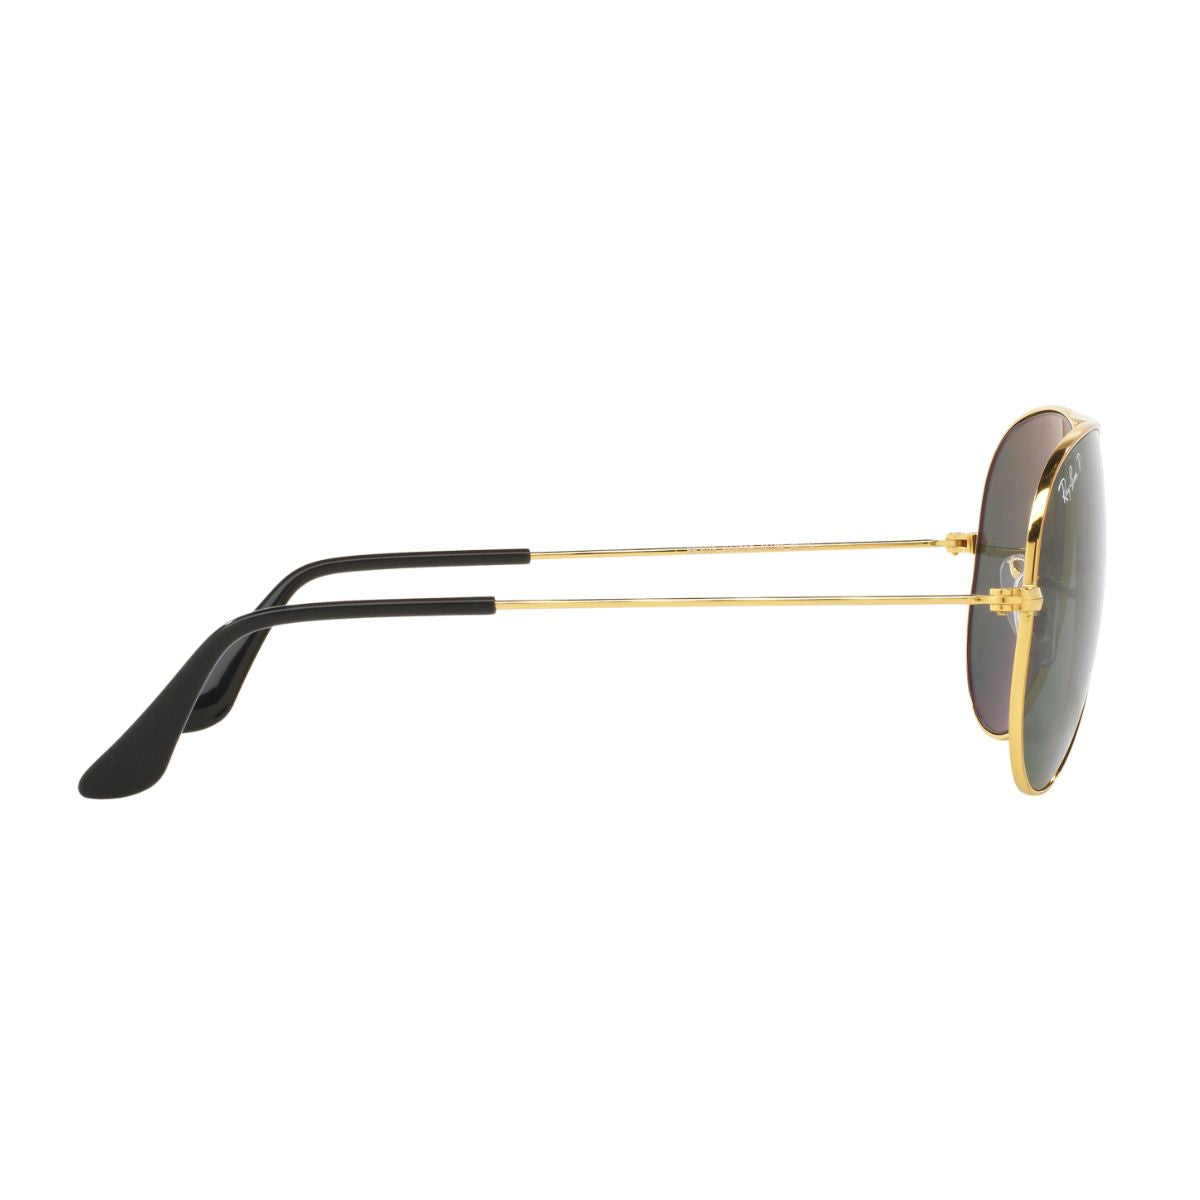 "Stylish Rayban 3025 001/58 Polarized Eyewear Sunglass for Men At Optorium"